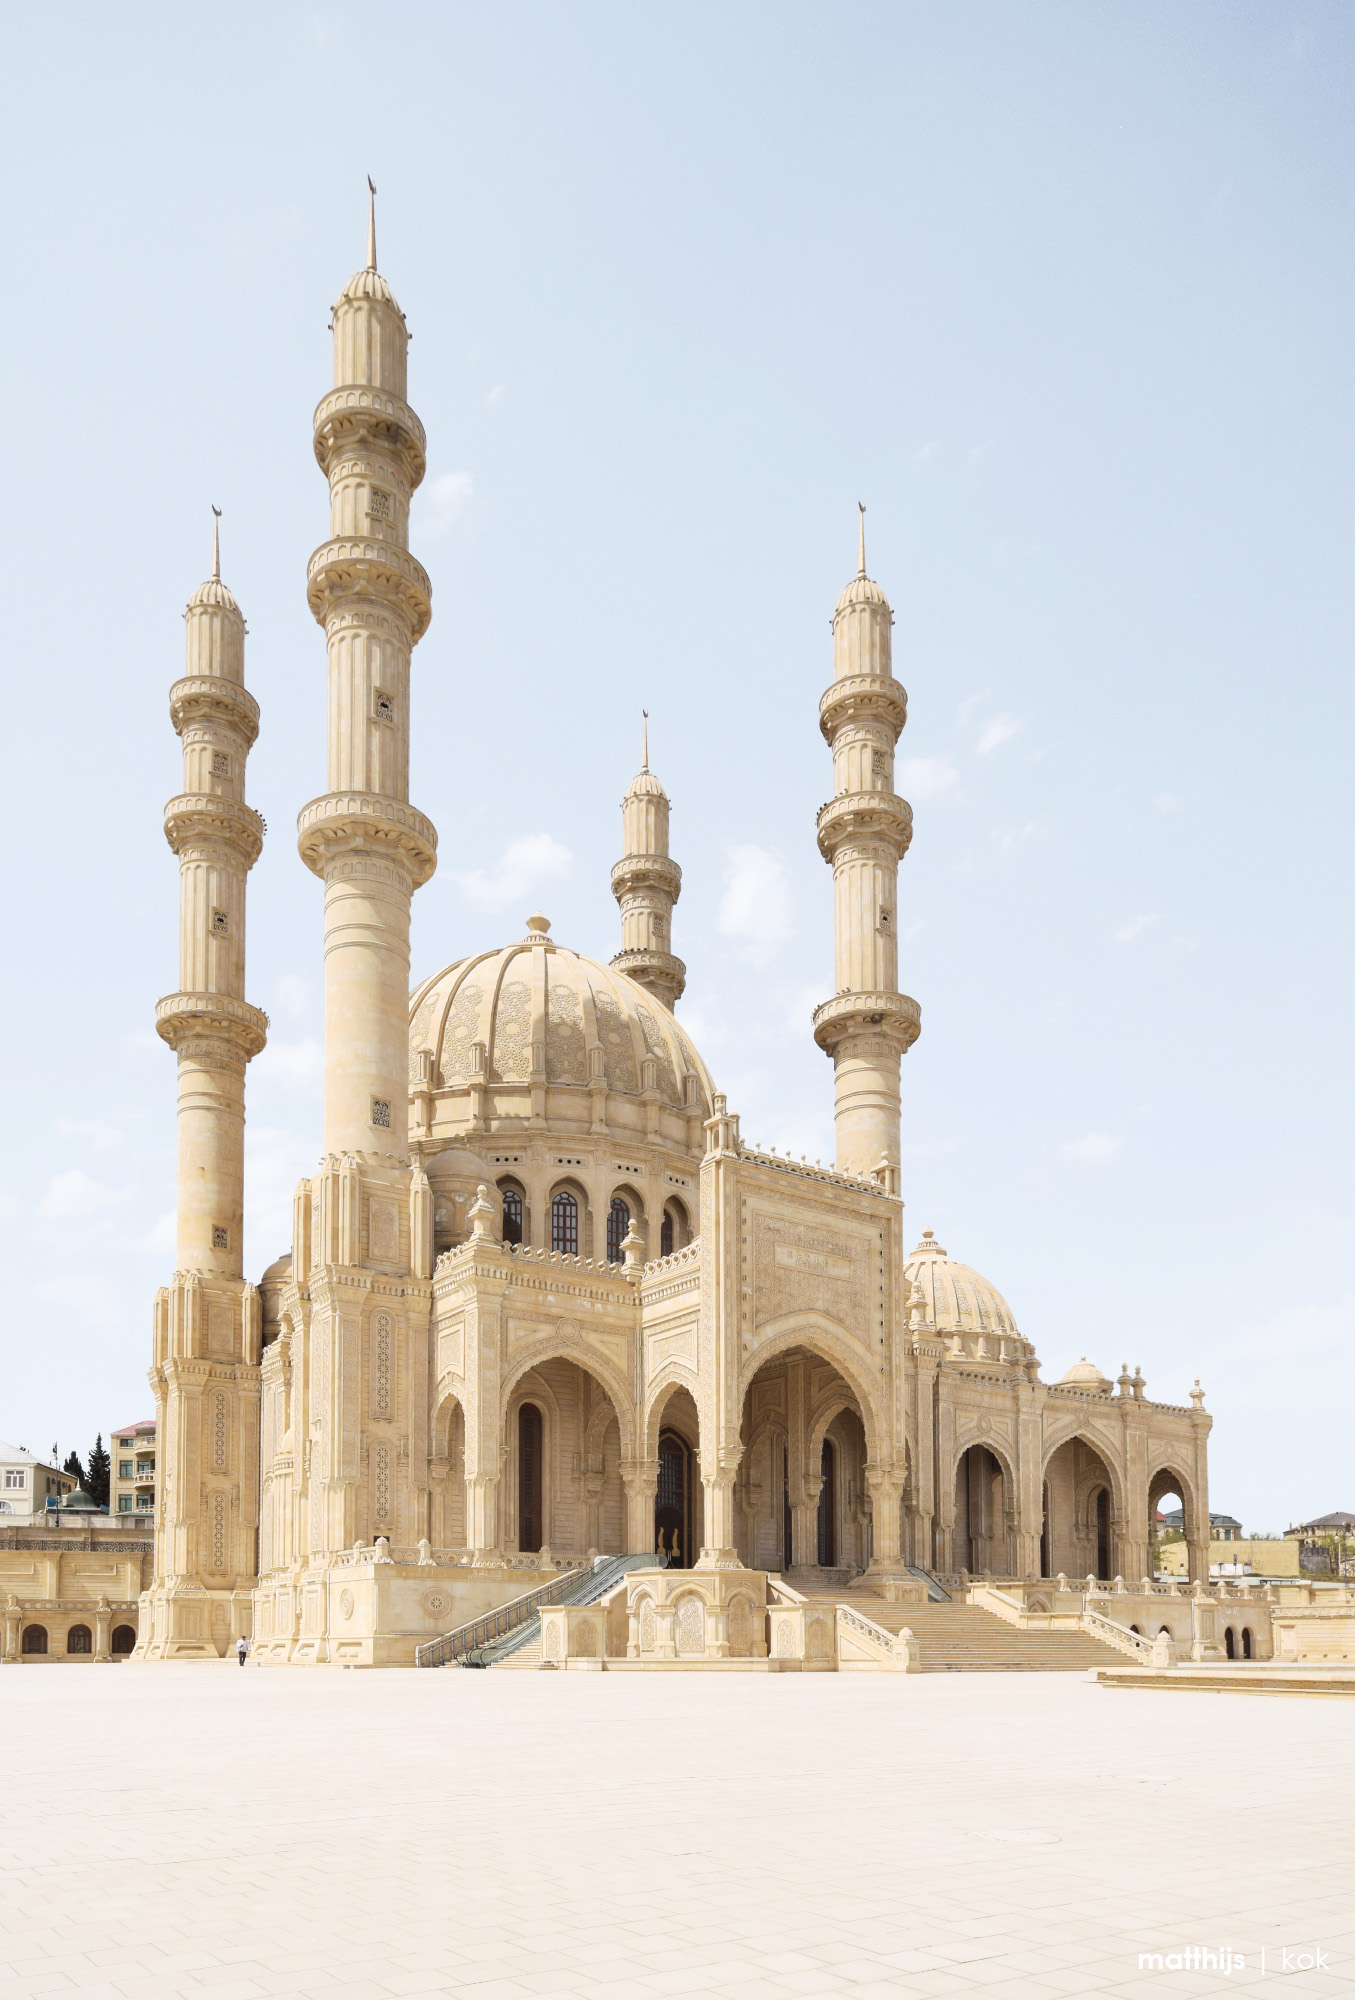 Heydar Mosque, Baku, Azerbaijan | Photo by Matthijs Kok